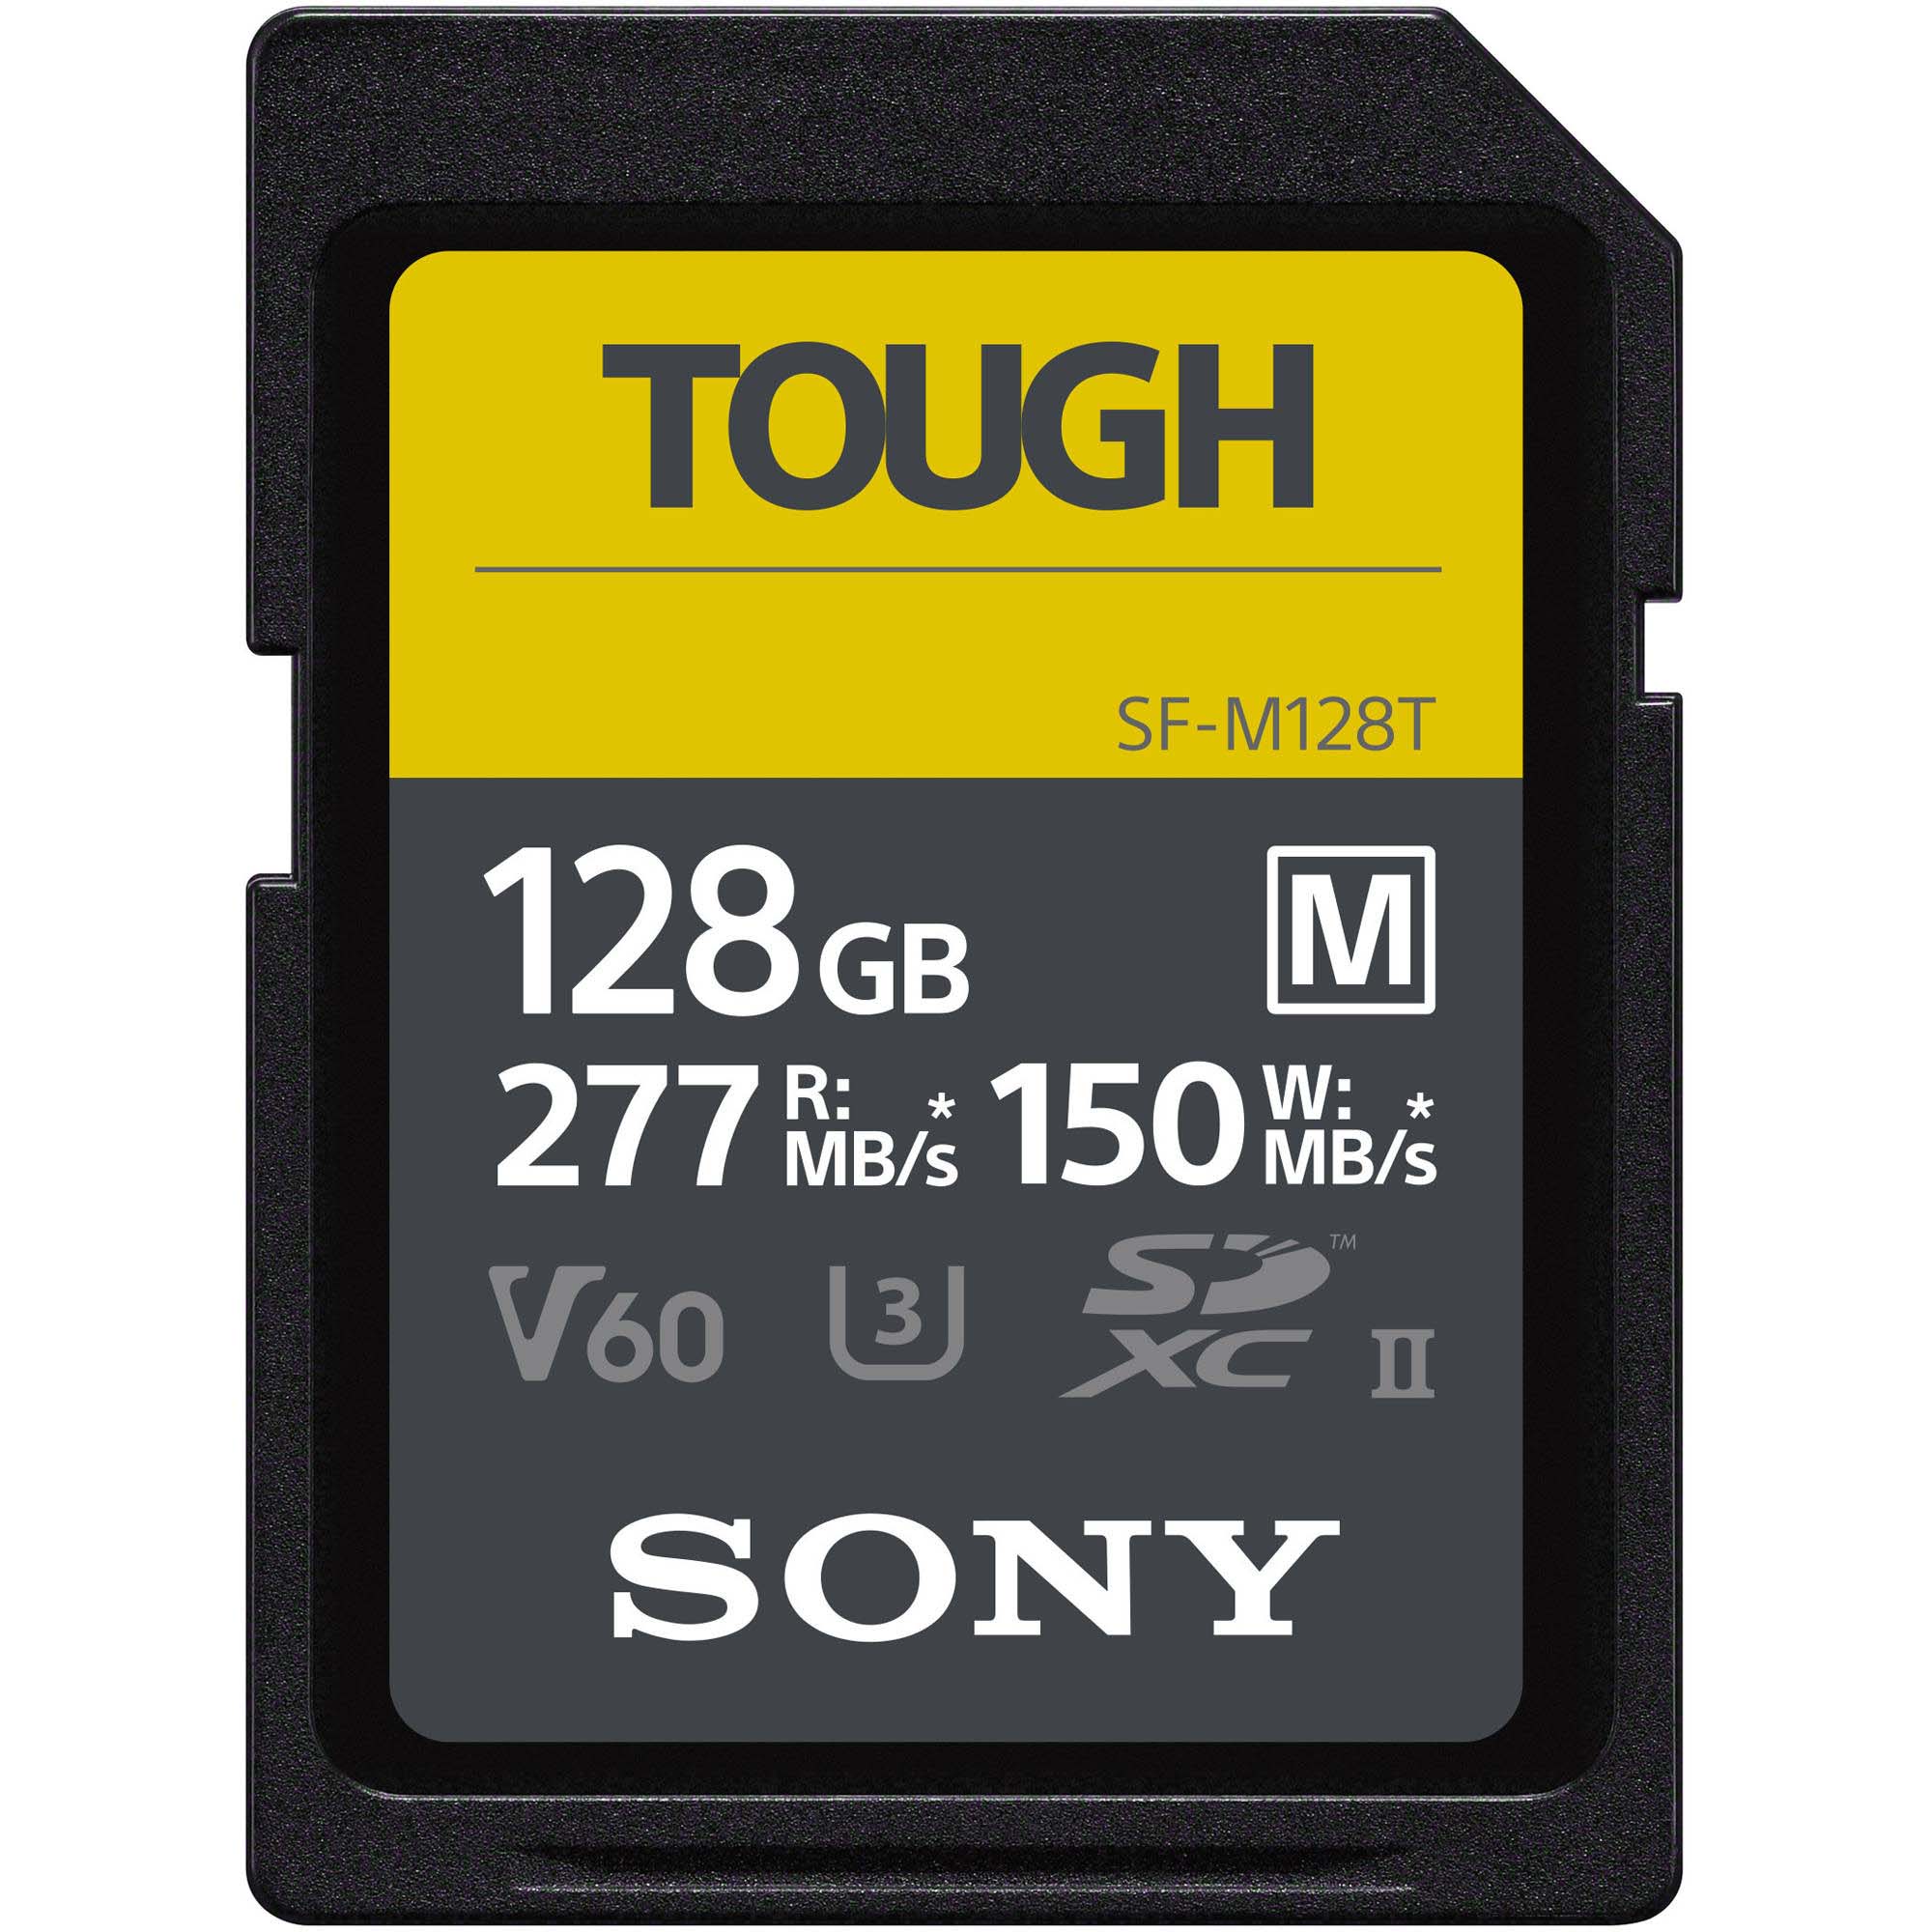 TARJETA SD 128 GB SONY M TOUGH (150 MB/SEG) V60 SDXC II